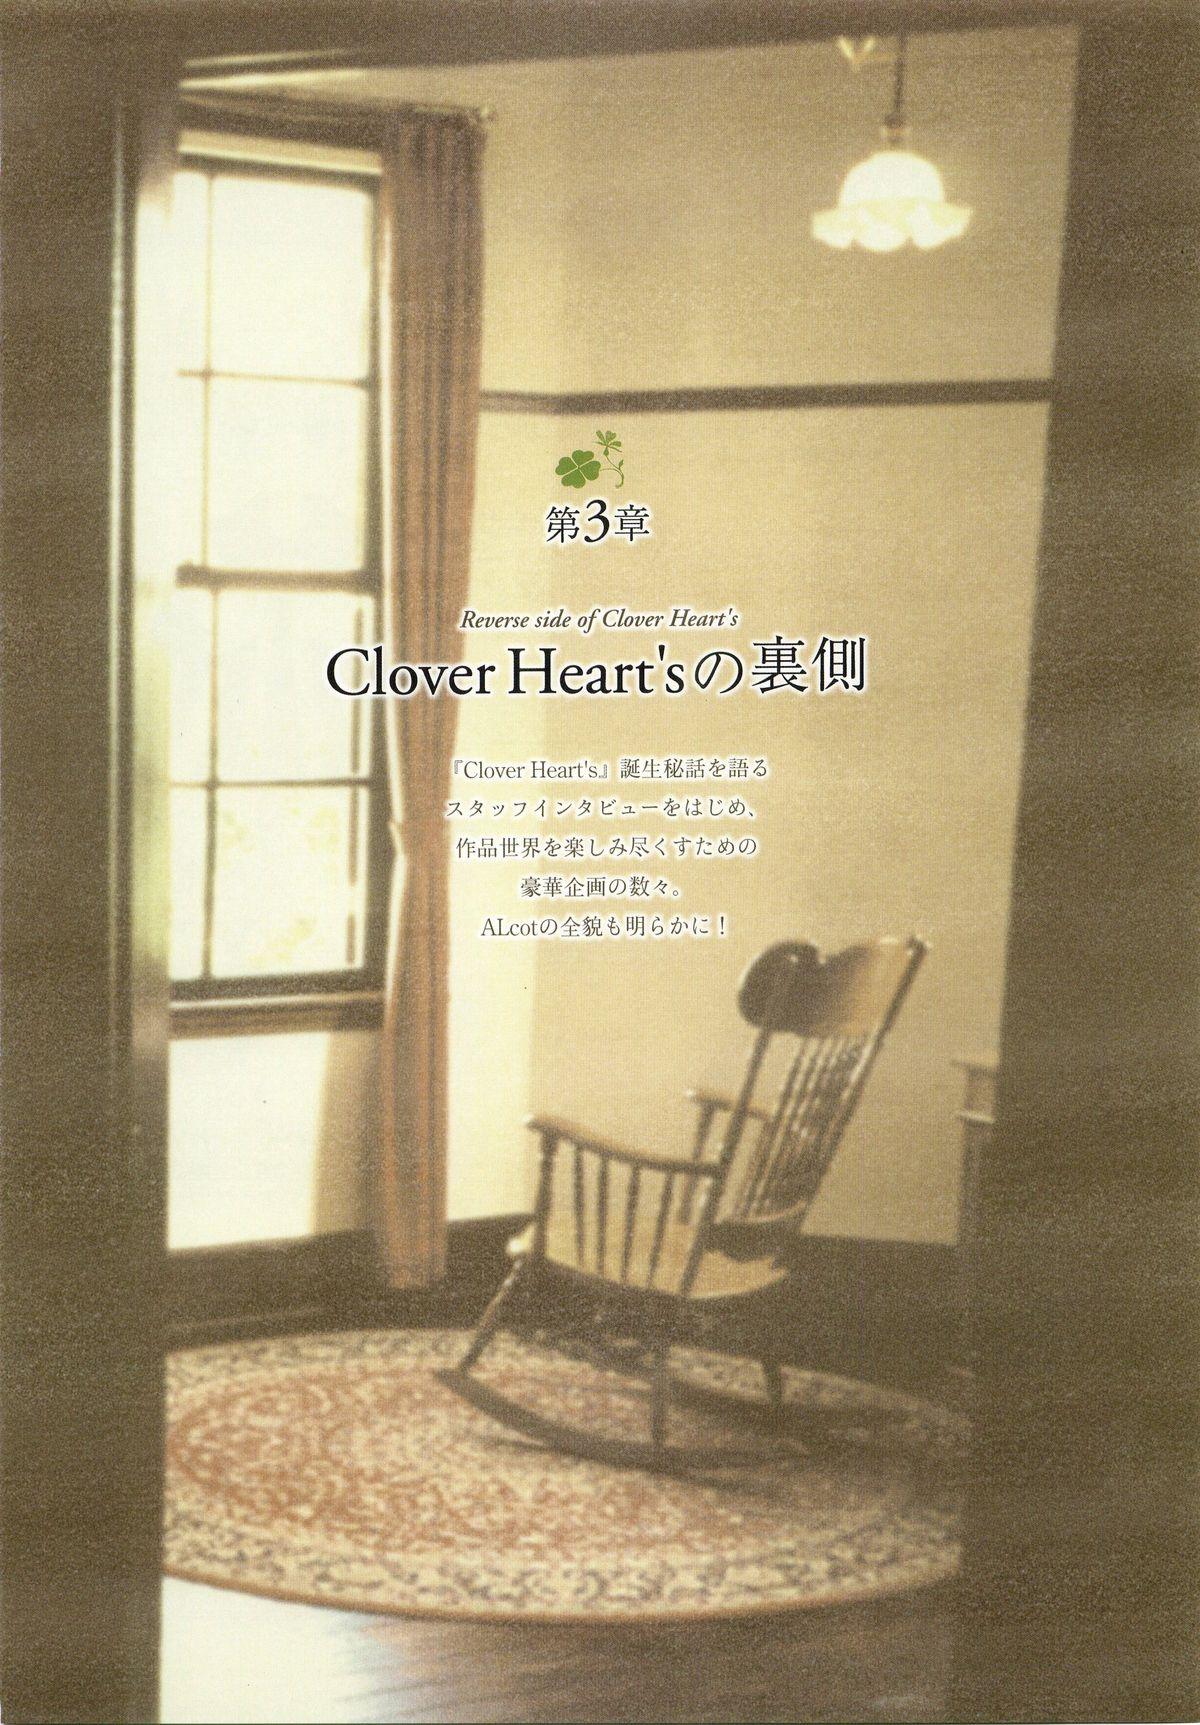 Clover Heart's Visual Fan Book 101